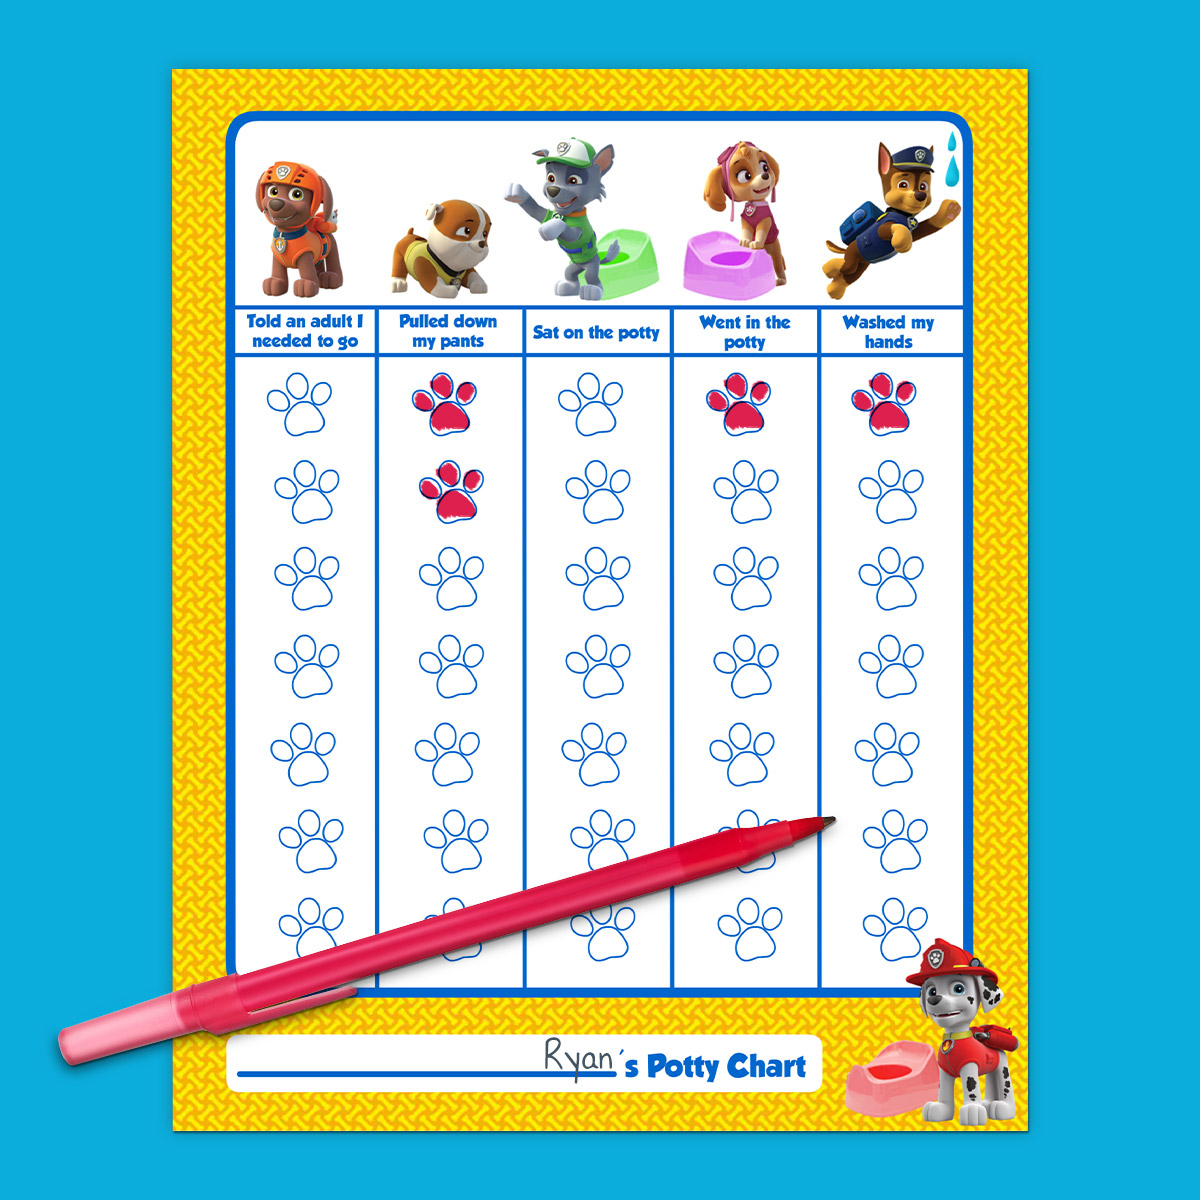 Paw Patrol Potty Training Chart | Nickelodeon Parents - Free Printable Potty Charts